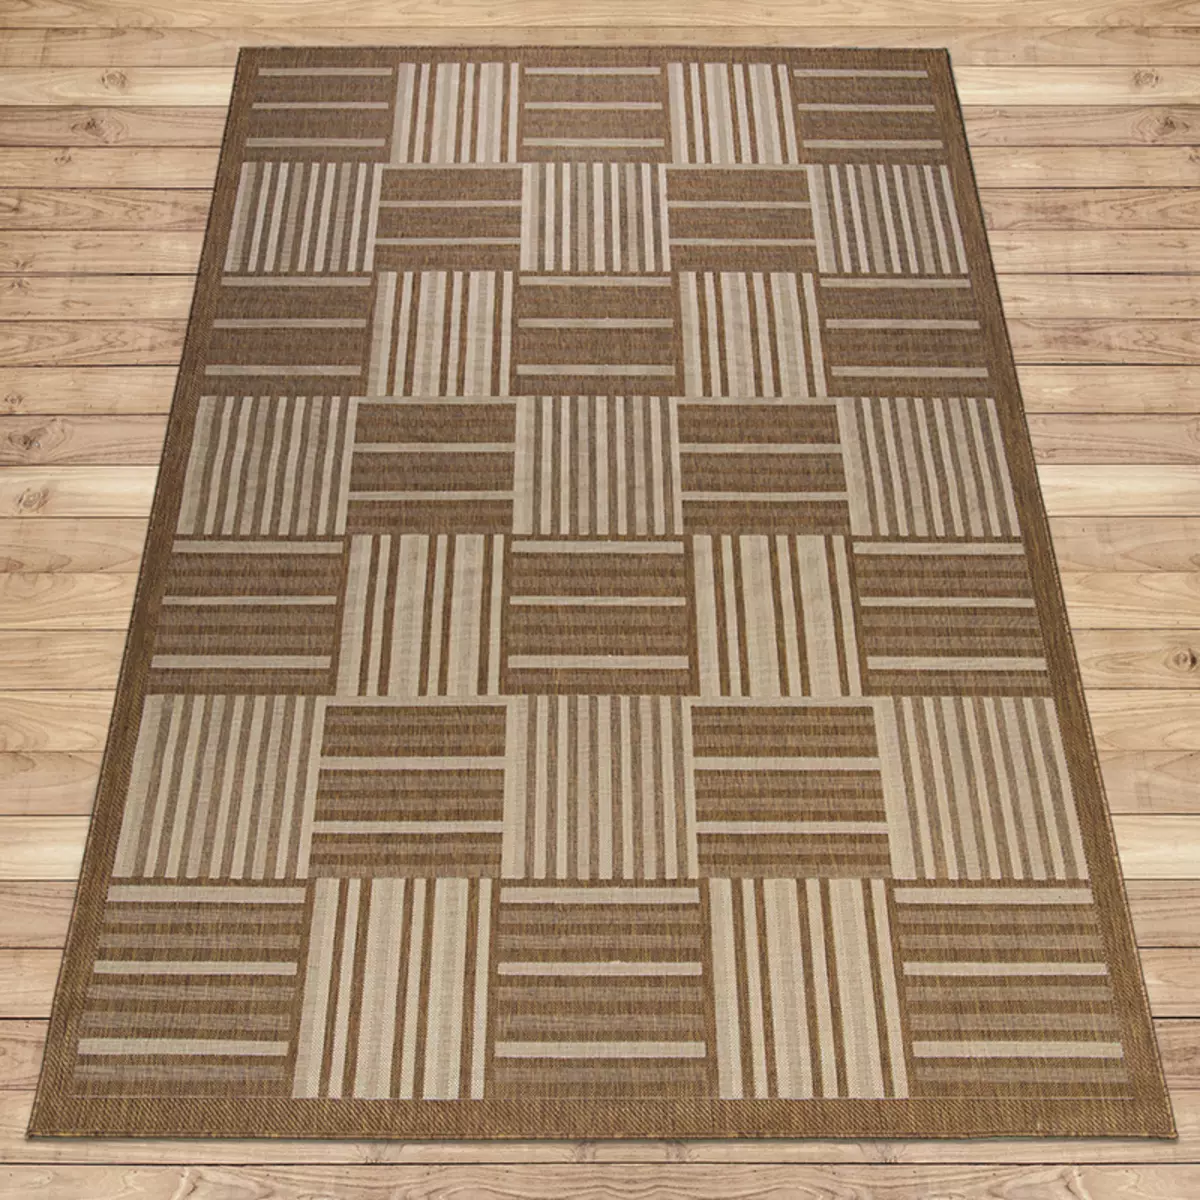 Hallway (57 ফটো) মধ্যে rugs: কার্পেট এবং অন্যান্য উপকরণ থেকে মেঝে উপর জুতা জুতা জন্য welded কার্পেট এবং mats welded 9287_18